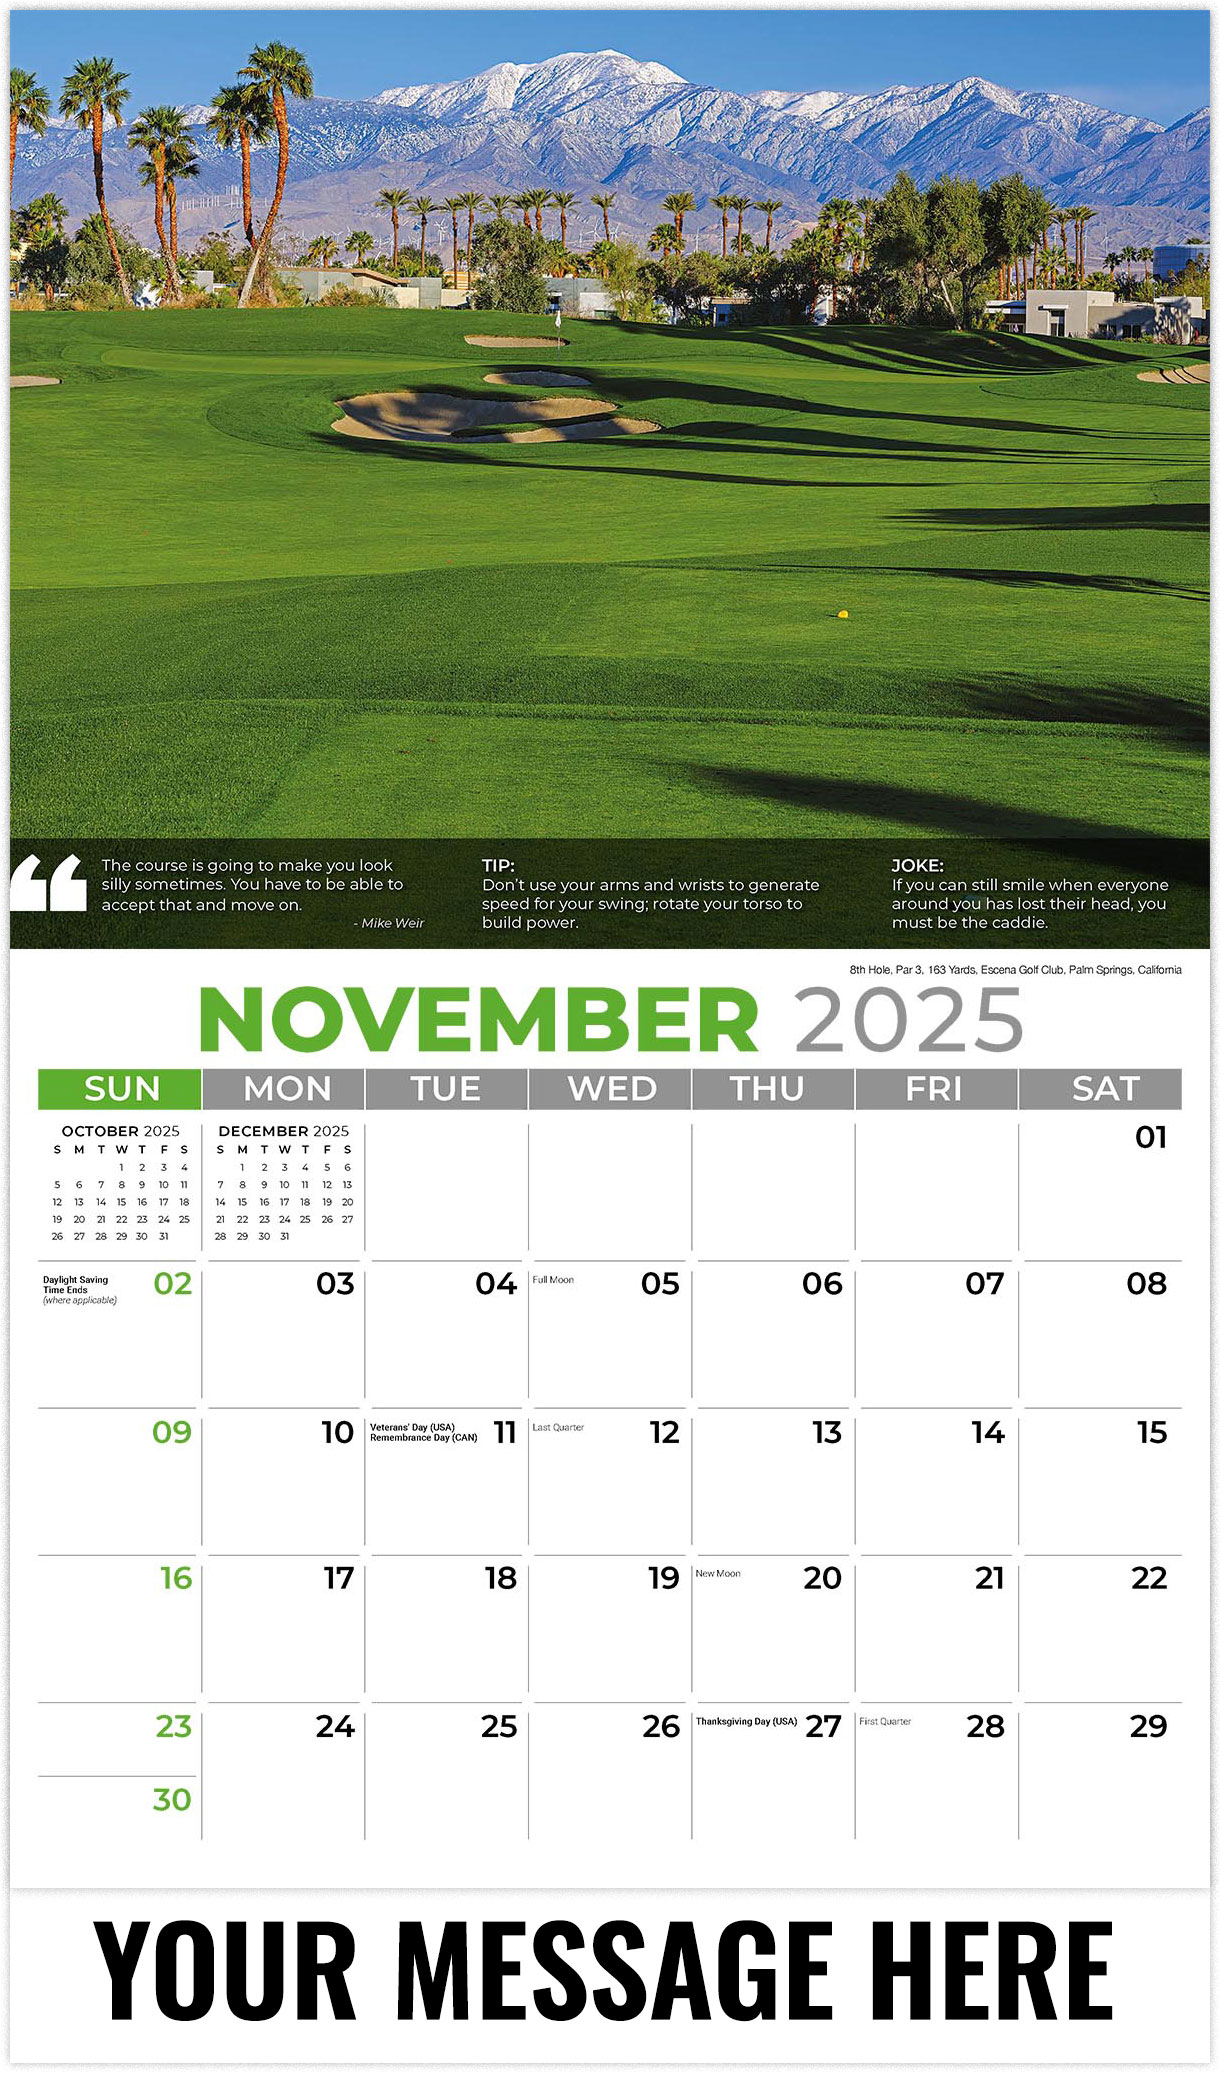 Galleria Golf Tips - 2025